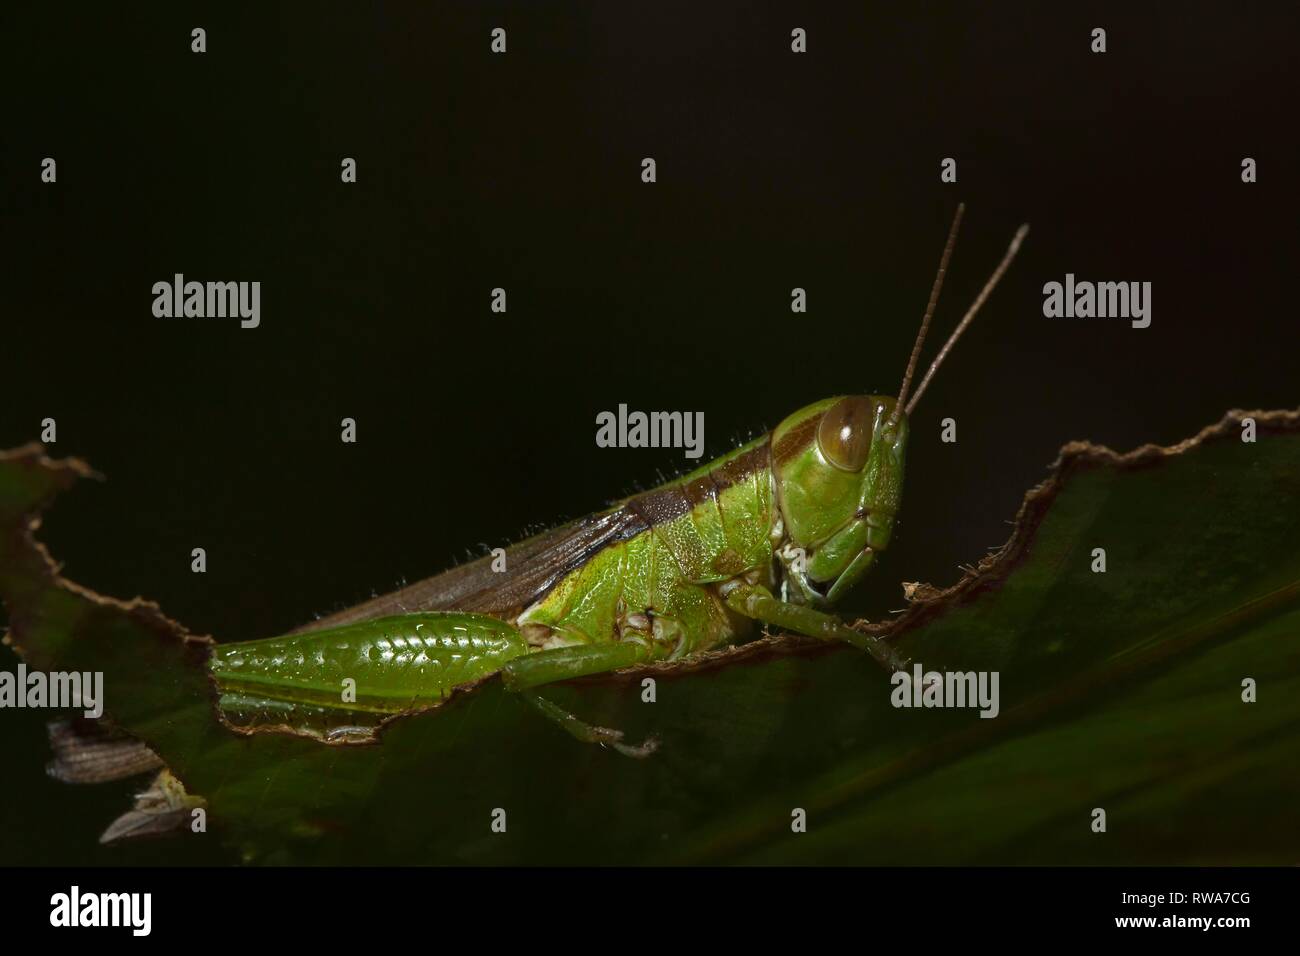 Slant-faced grasshopper (Gomphocerinae) sits on pitted leaf, Thailand Stock Photo